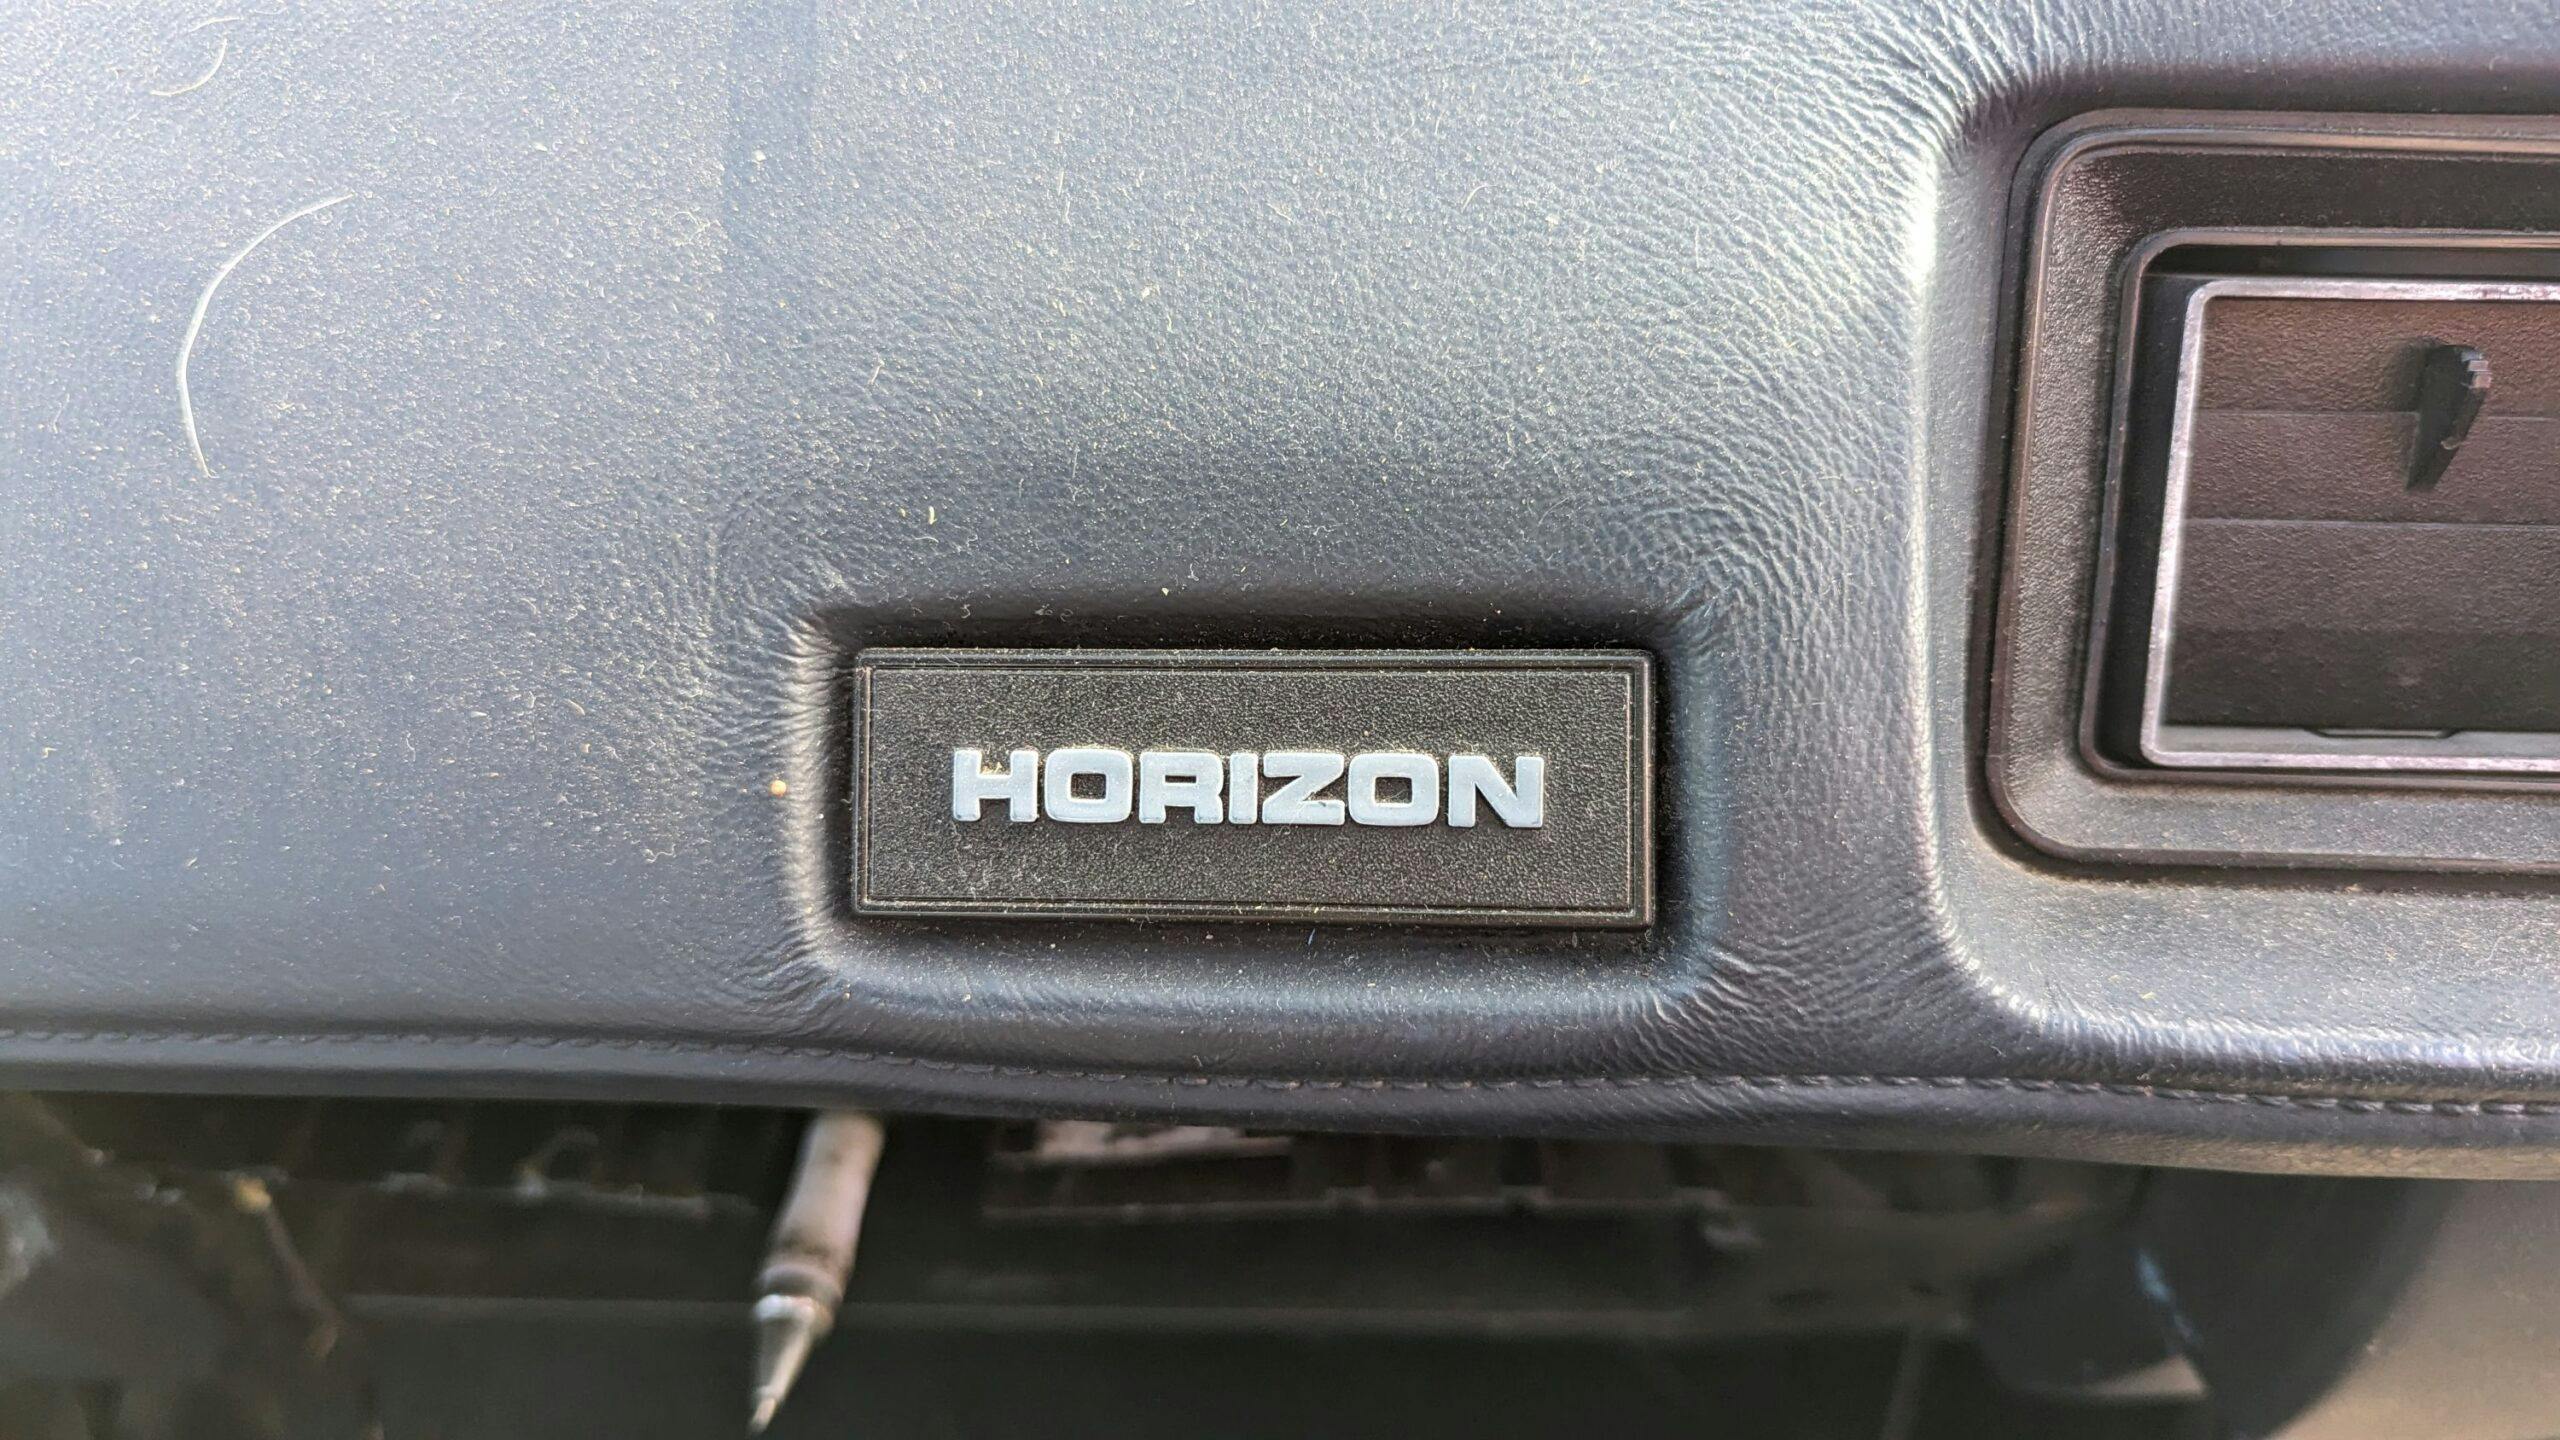 1988 Plymouth Horizon America dsah badge